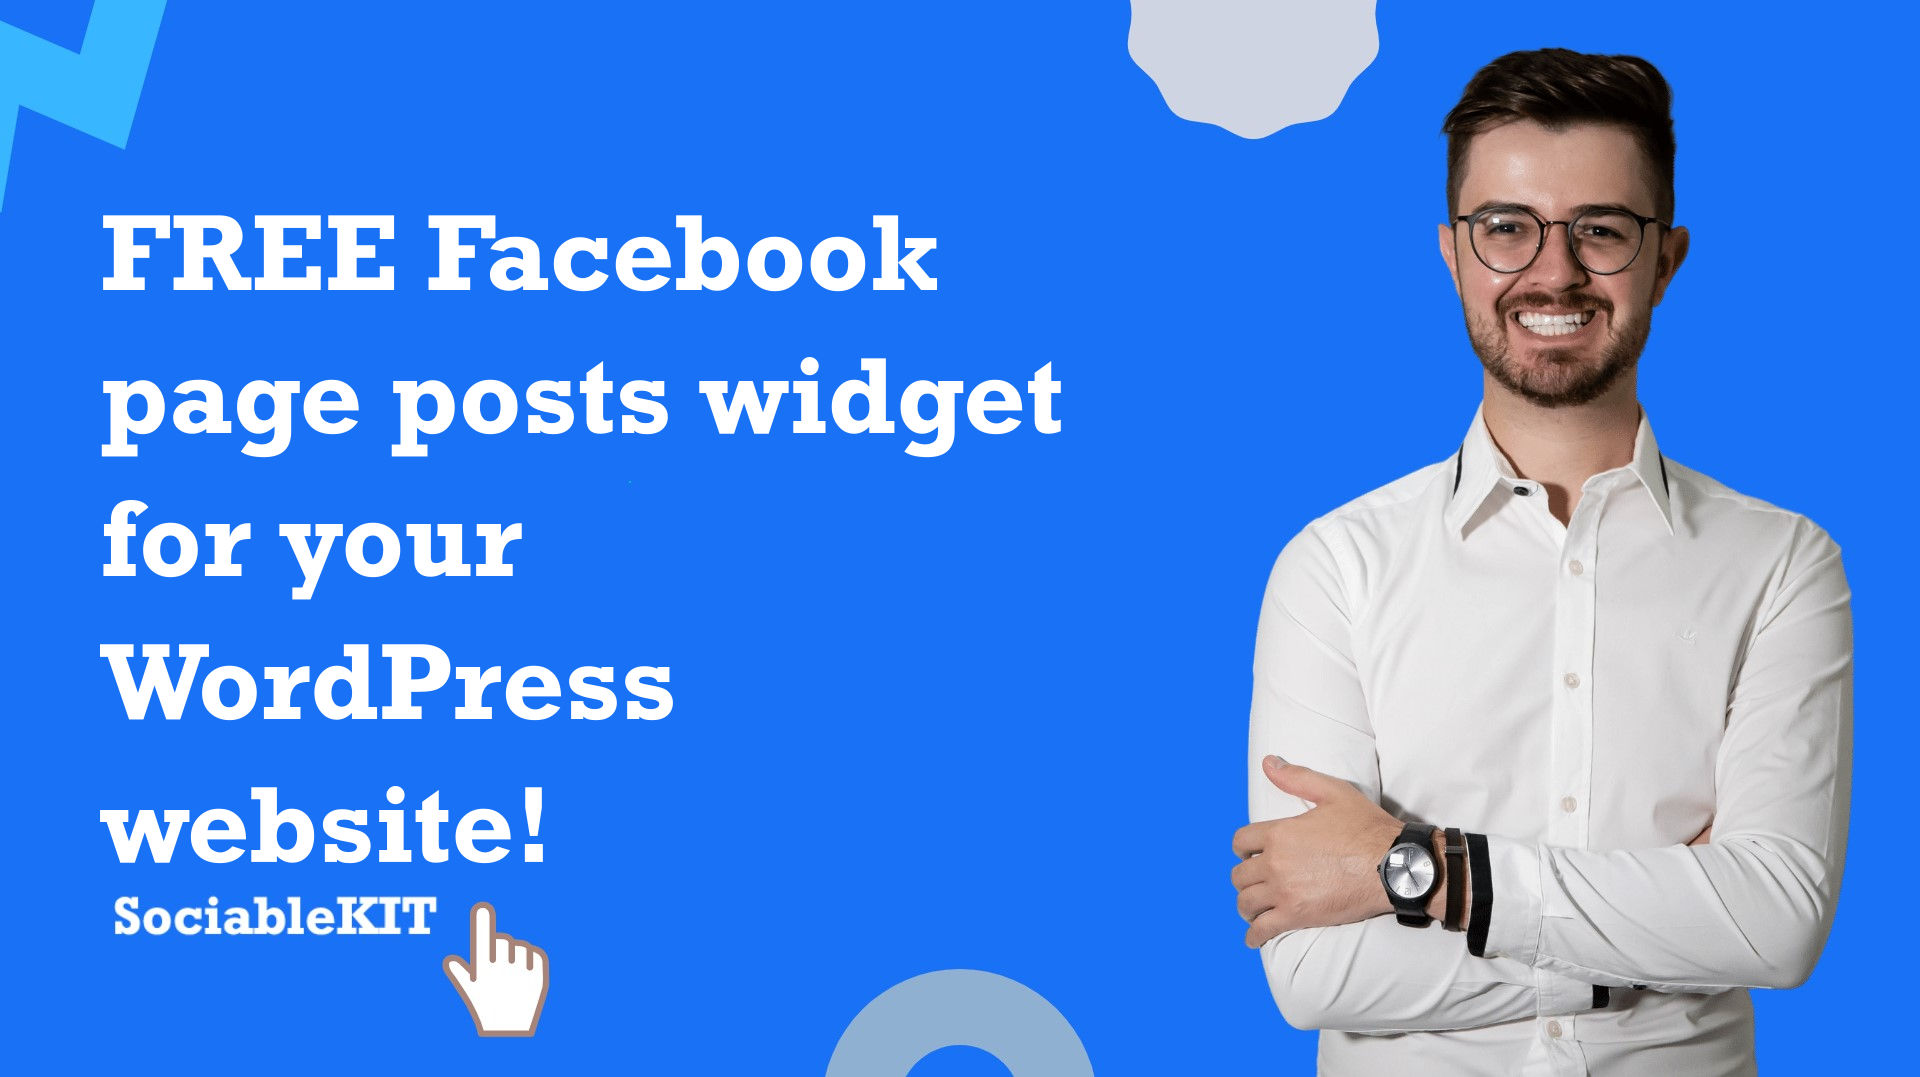 Free Facebook page posts widget for your WordPress website